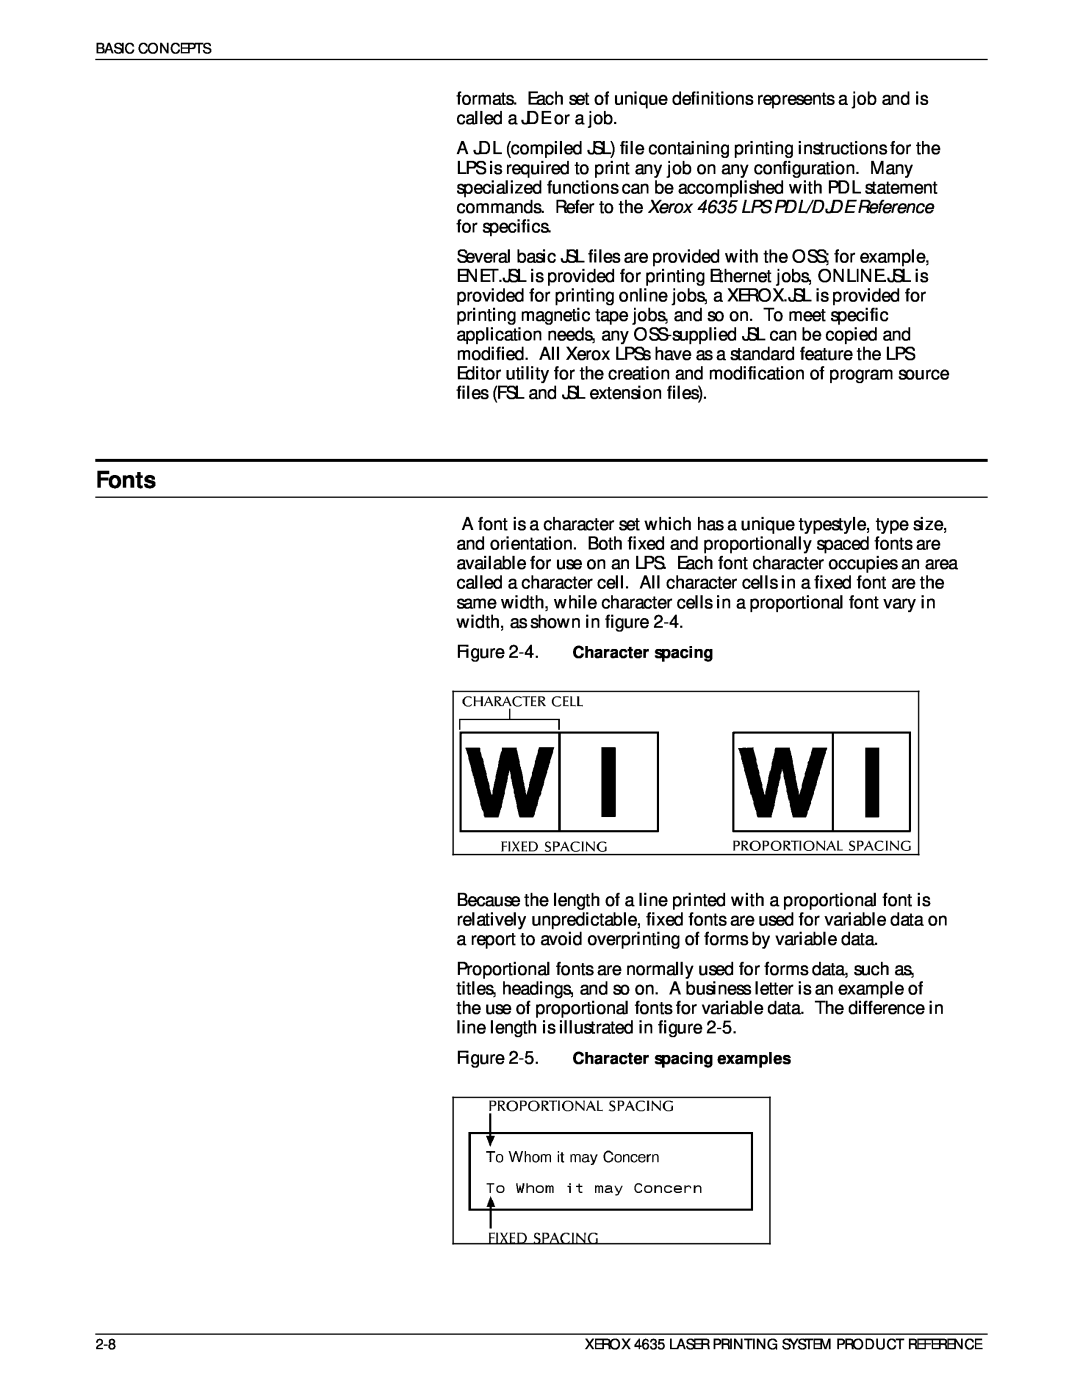 Xerox 721P83071 manual Fonts, 4. Character spacing, 5. Character spacing examples 